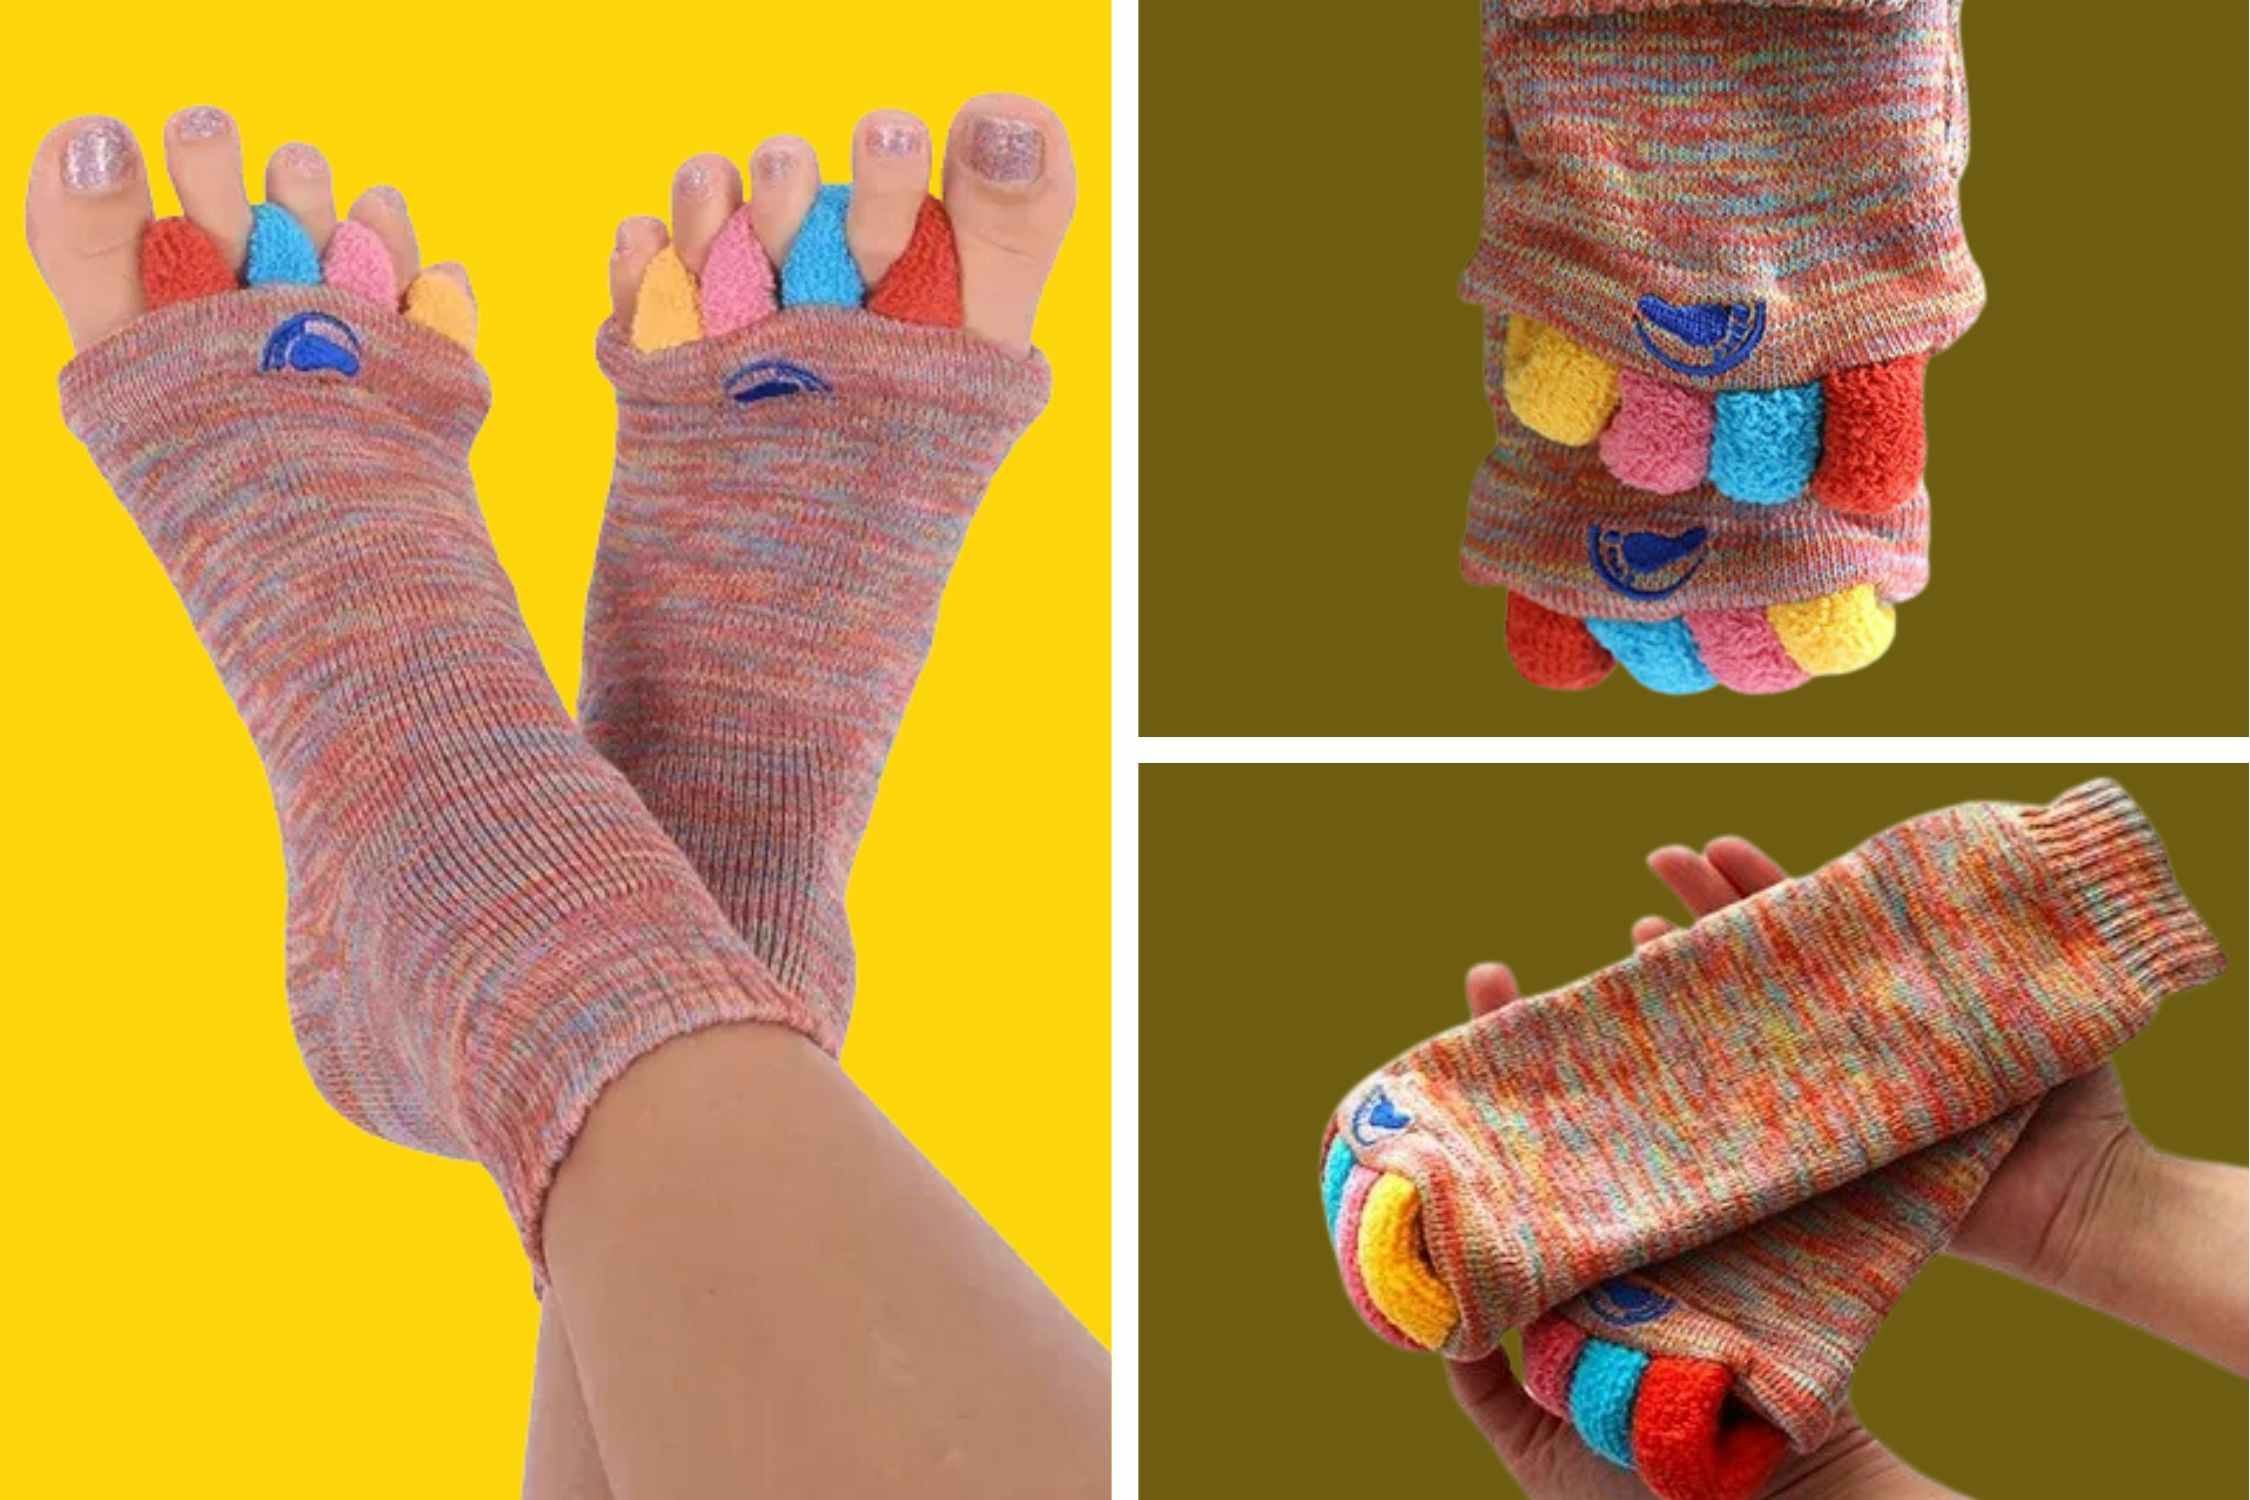 Buy 2 Pairs of My Happy Feet Socks, Get 1 Free (Plus Free Shipping)